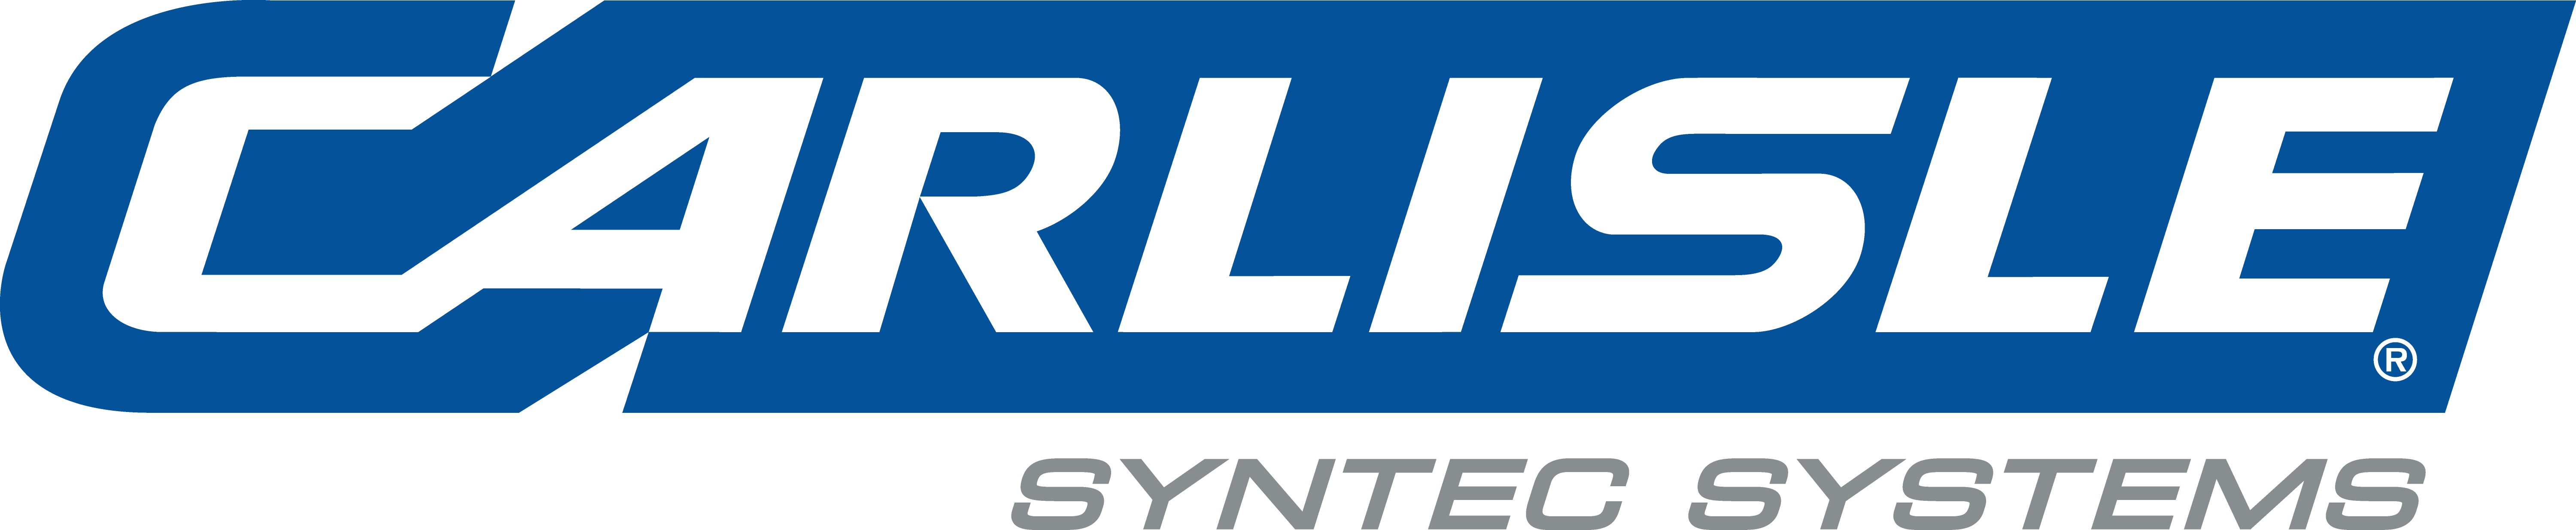 Carlisle SynTec Systems Logo PNG